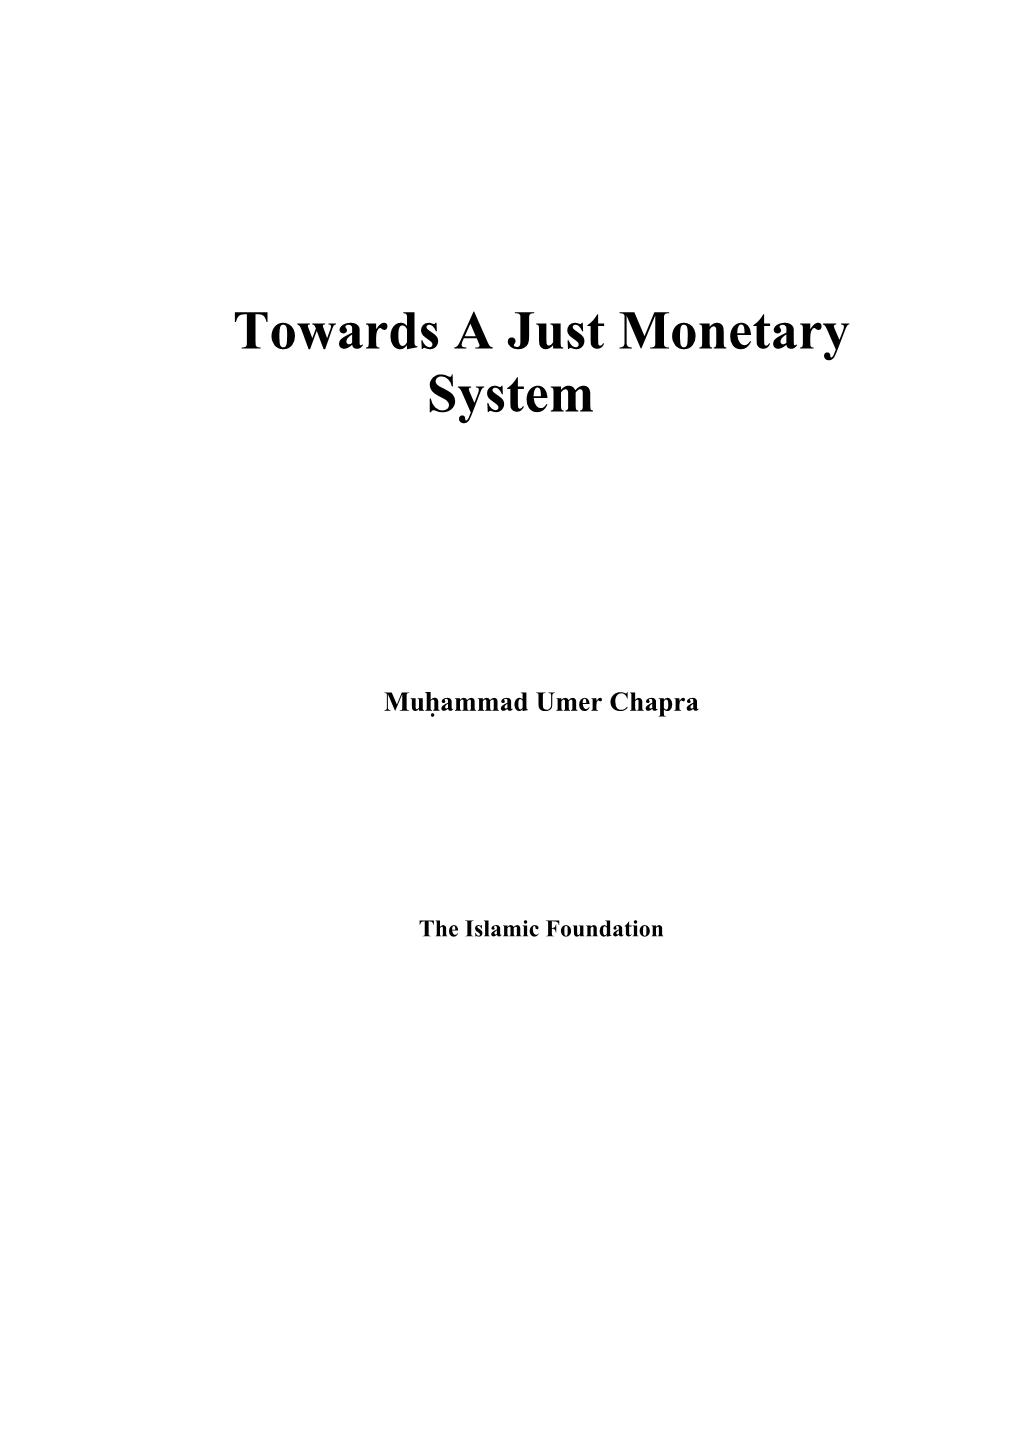 Towards a Just Monetary System